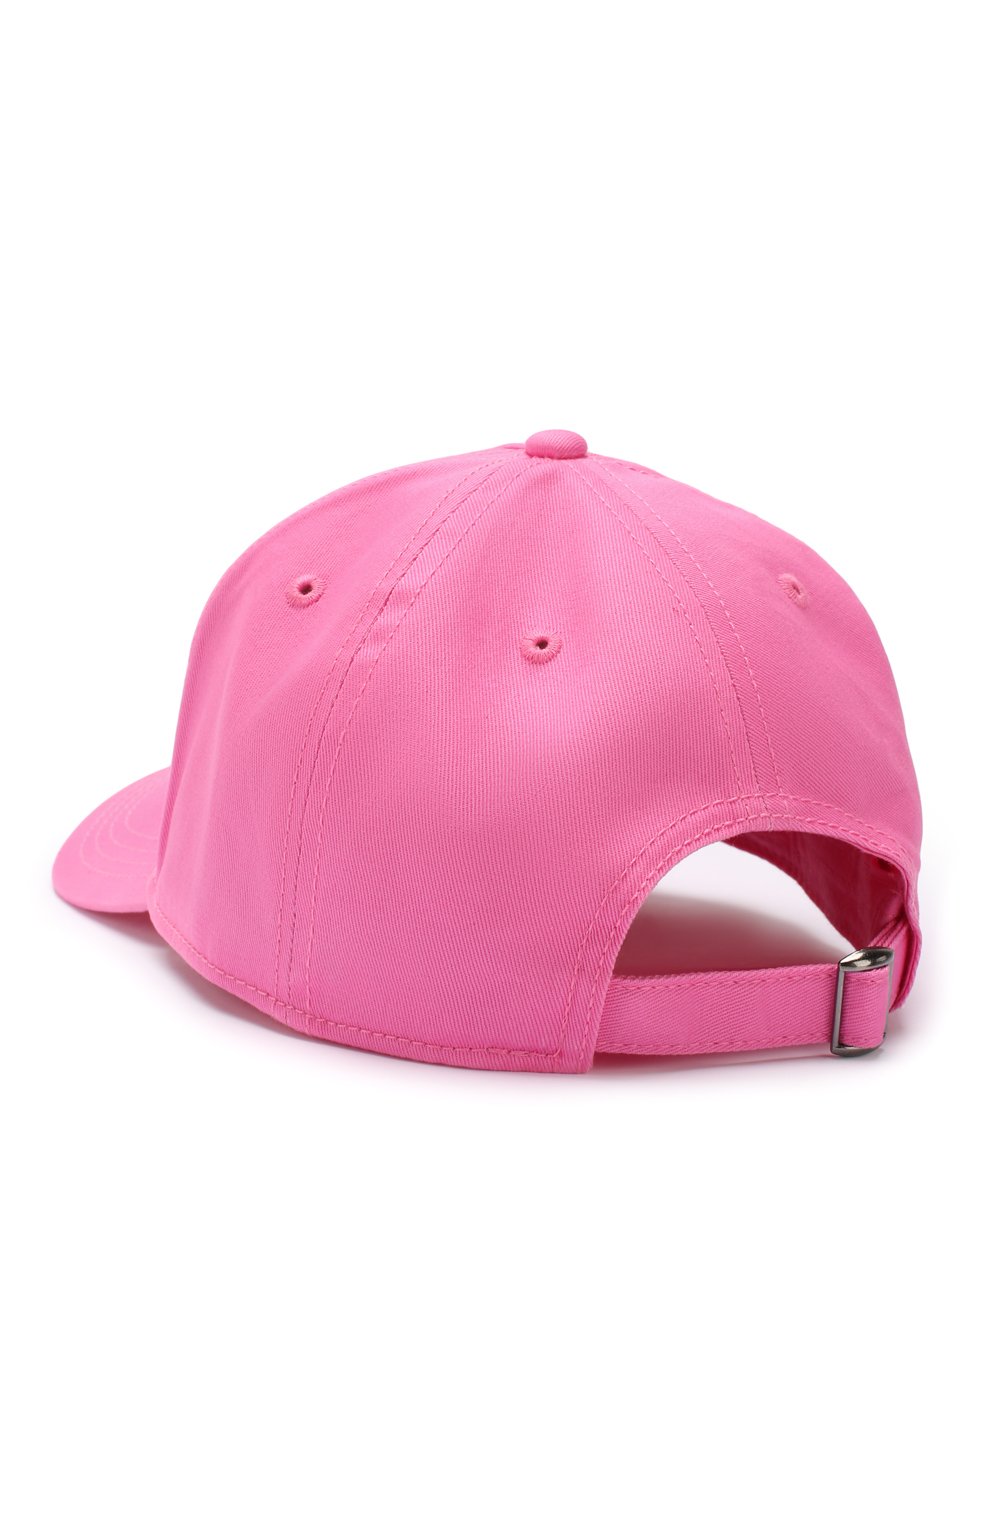 Детская хлопковая бейсболка N21 розового цвета, арт. N2143F/N0041/N21F1U | Фото 2 (Материал: Текстиль, Хлопок; Статус проверки: Проверена категория)